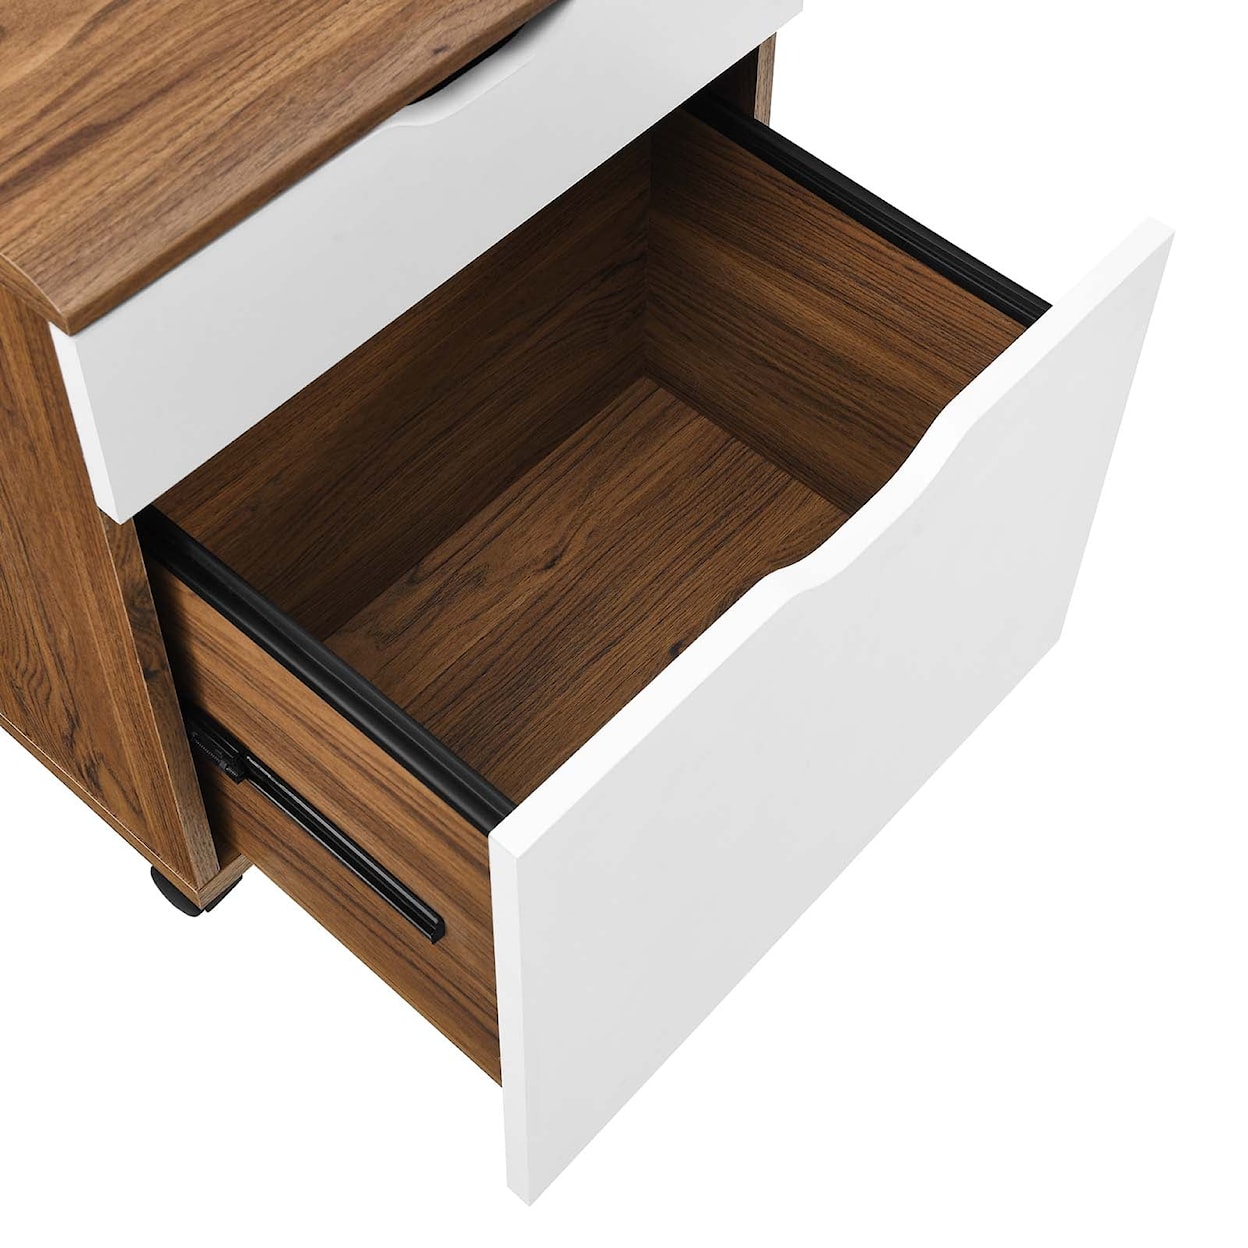 Modway Envision Wood Desk and File Cabinet Set